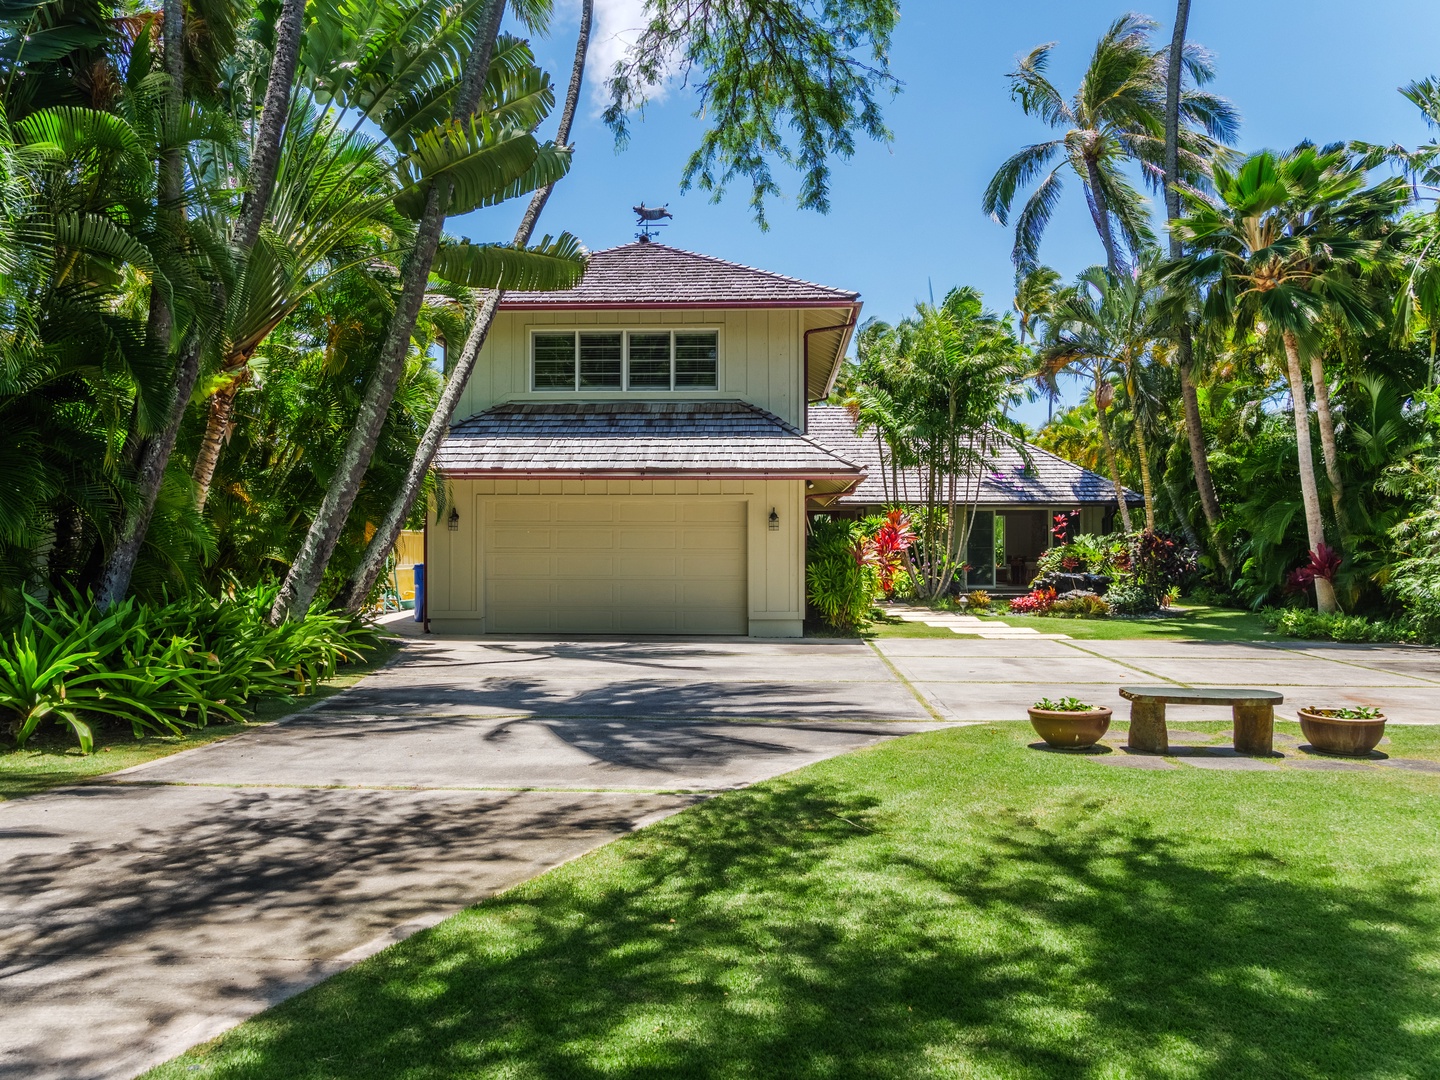 Honolulu Vacation Rentals, Paradise Beach Estate - The grand driveway